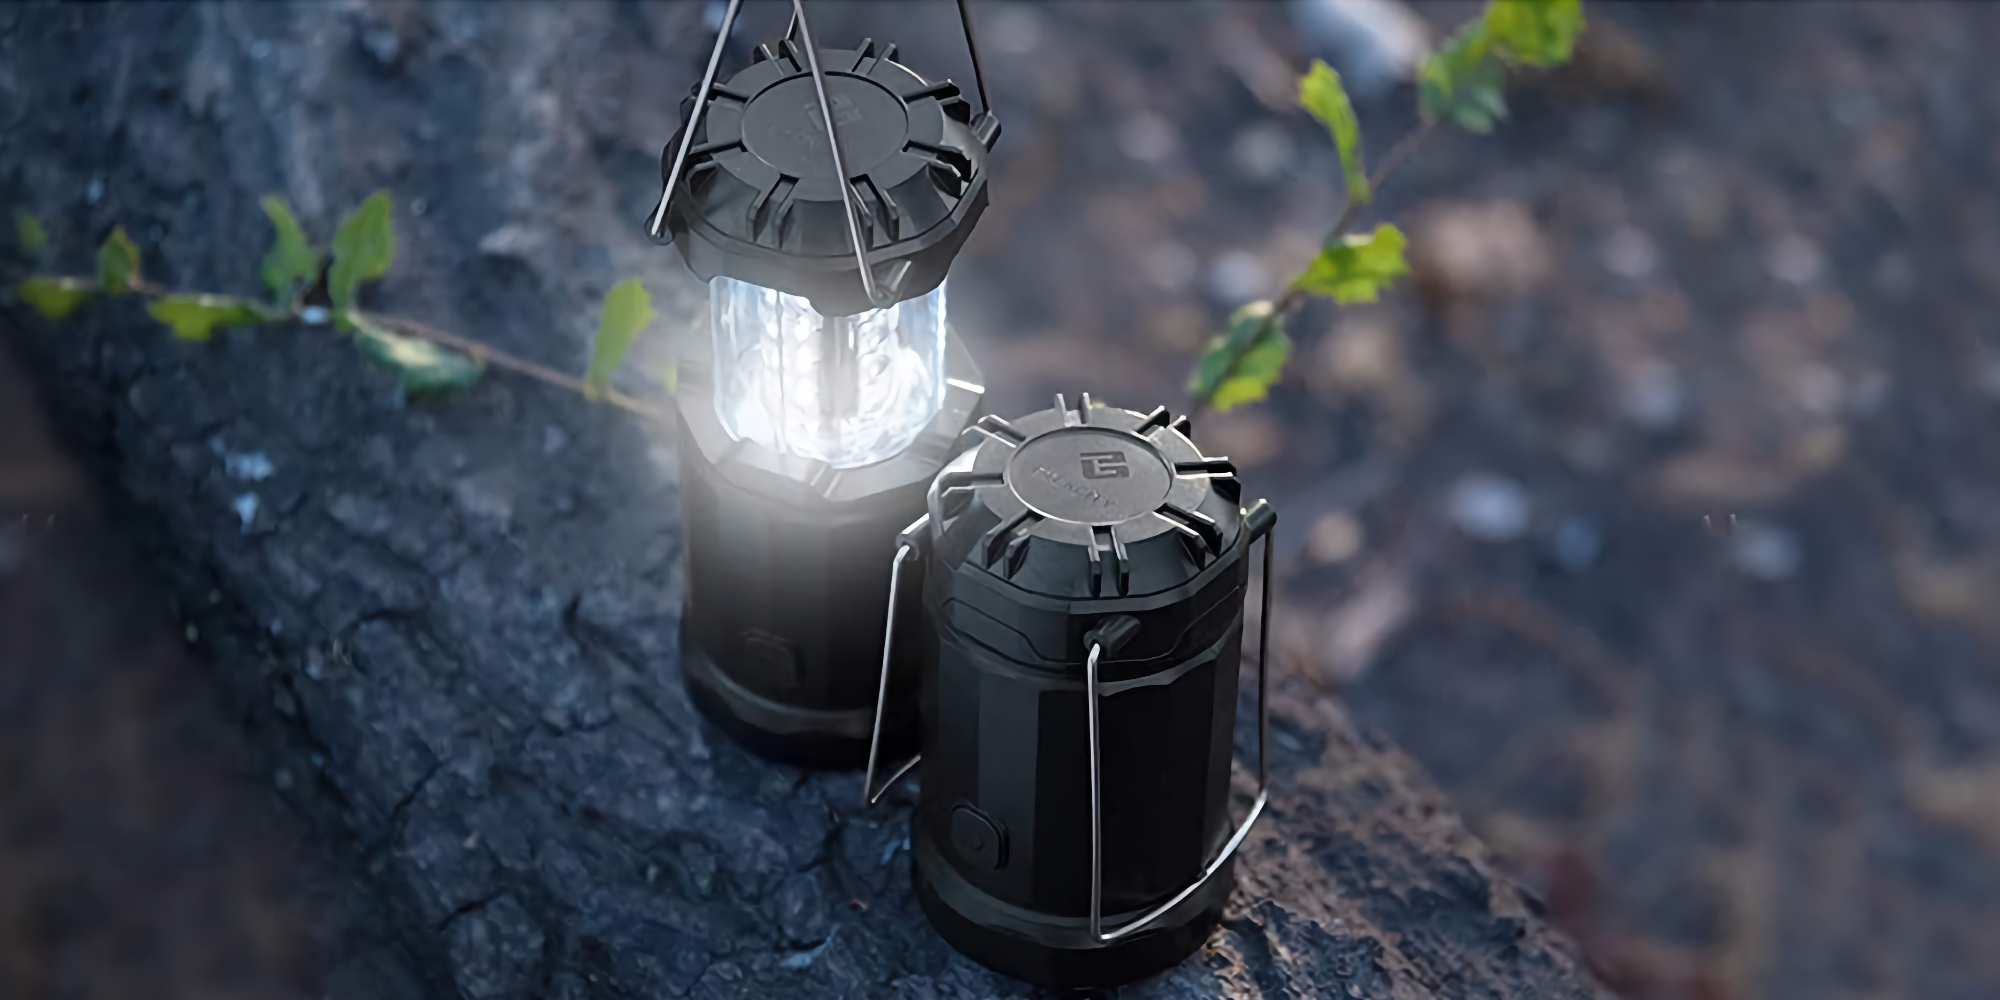  Etekcity Lantern Camping Essentials Lights, Led